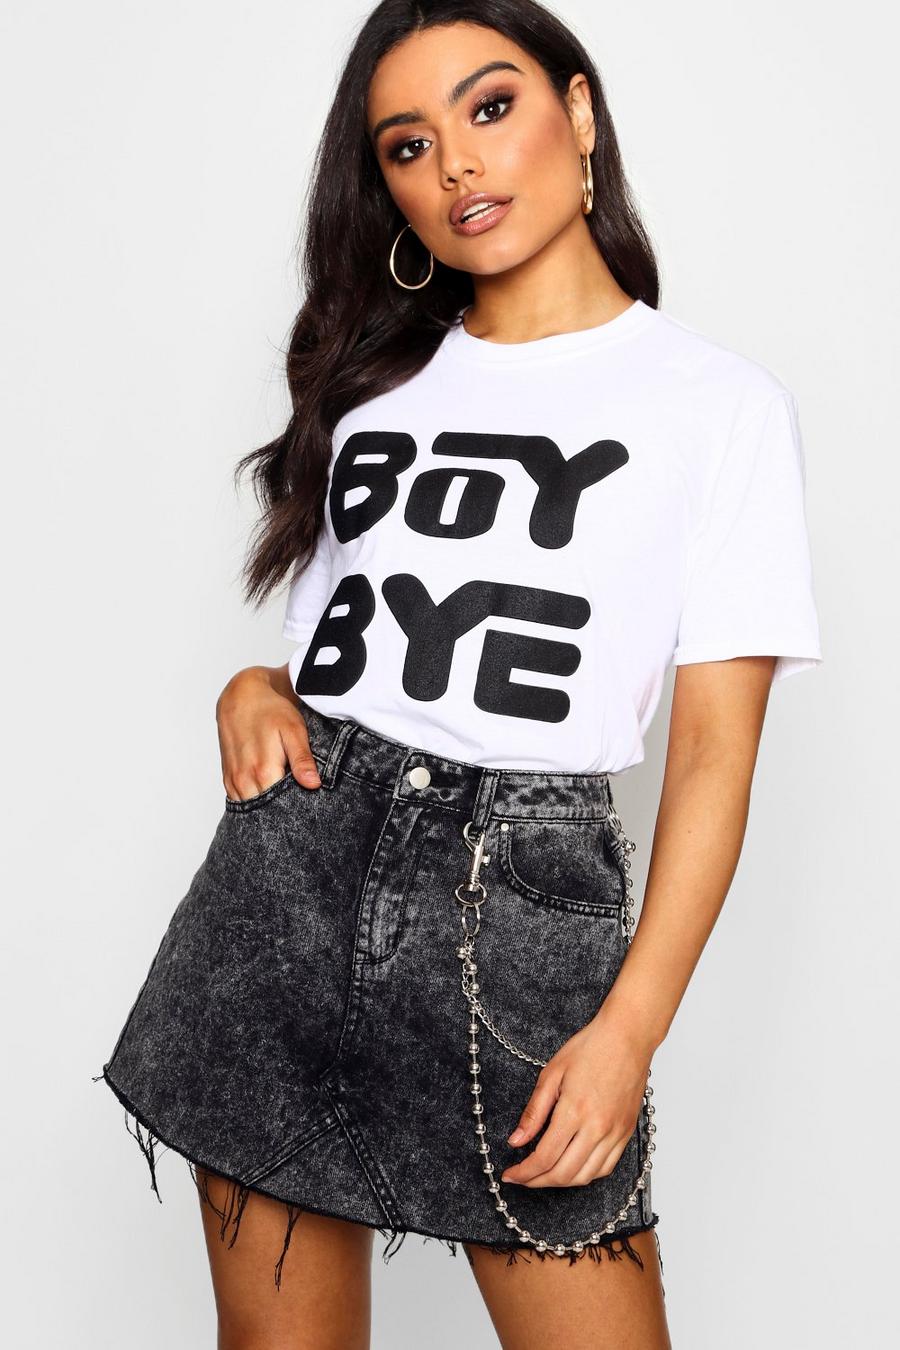 Boy Bye Printed T-Shirt image number 1